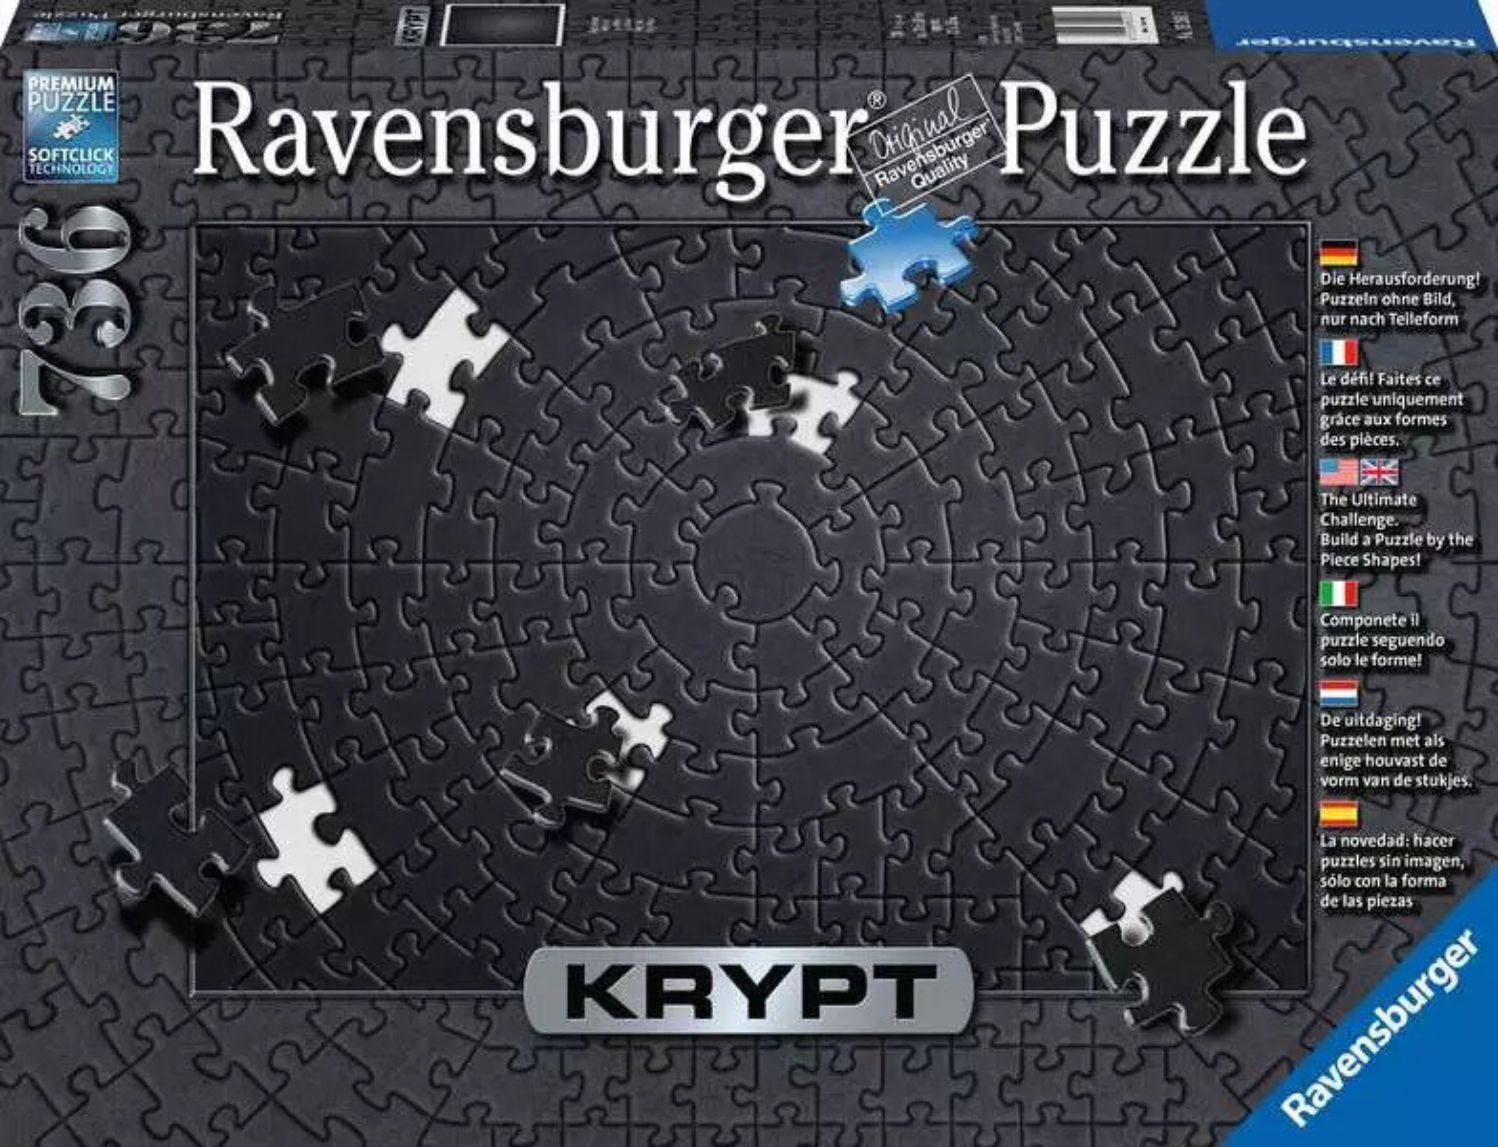 Ravensburger Puzzle 736 Teile – Krypt Black